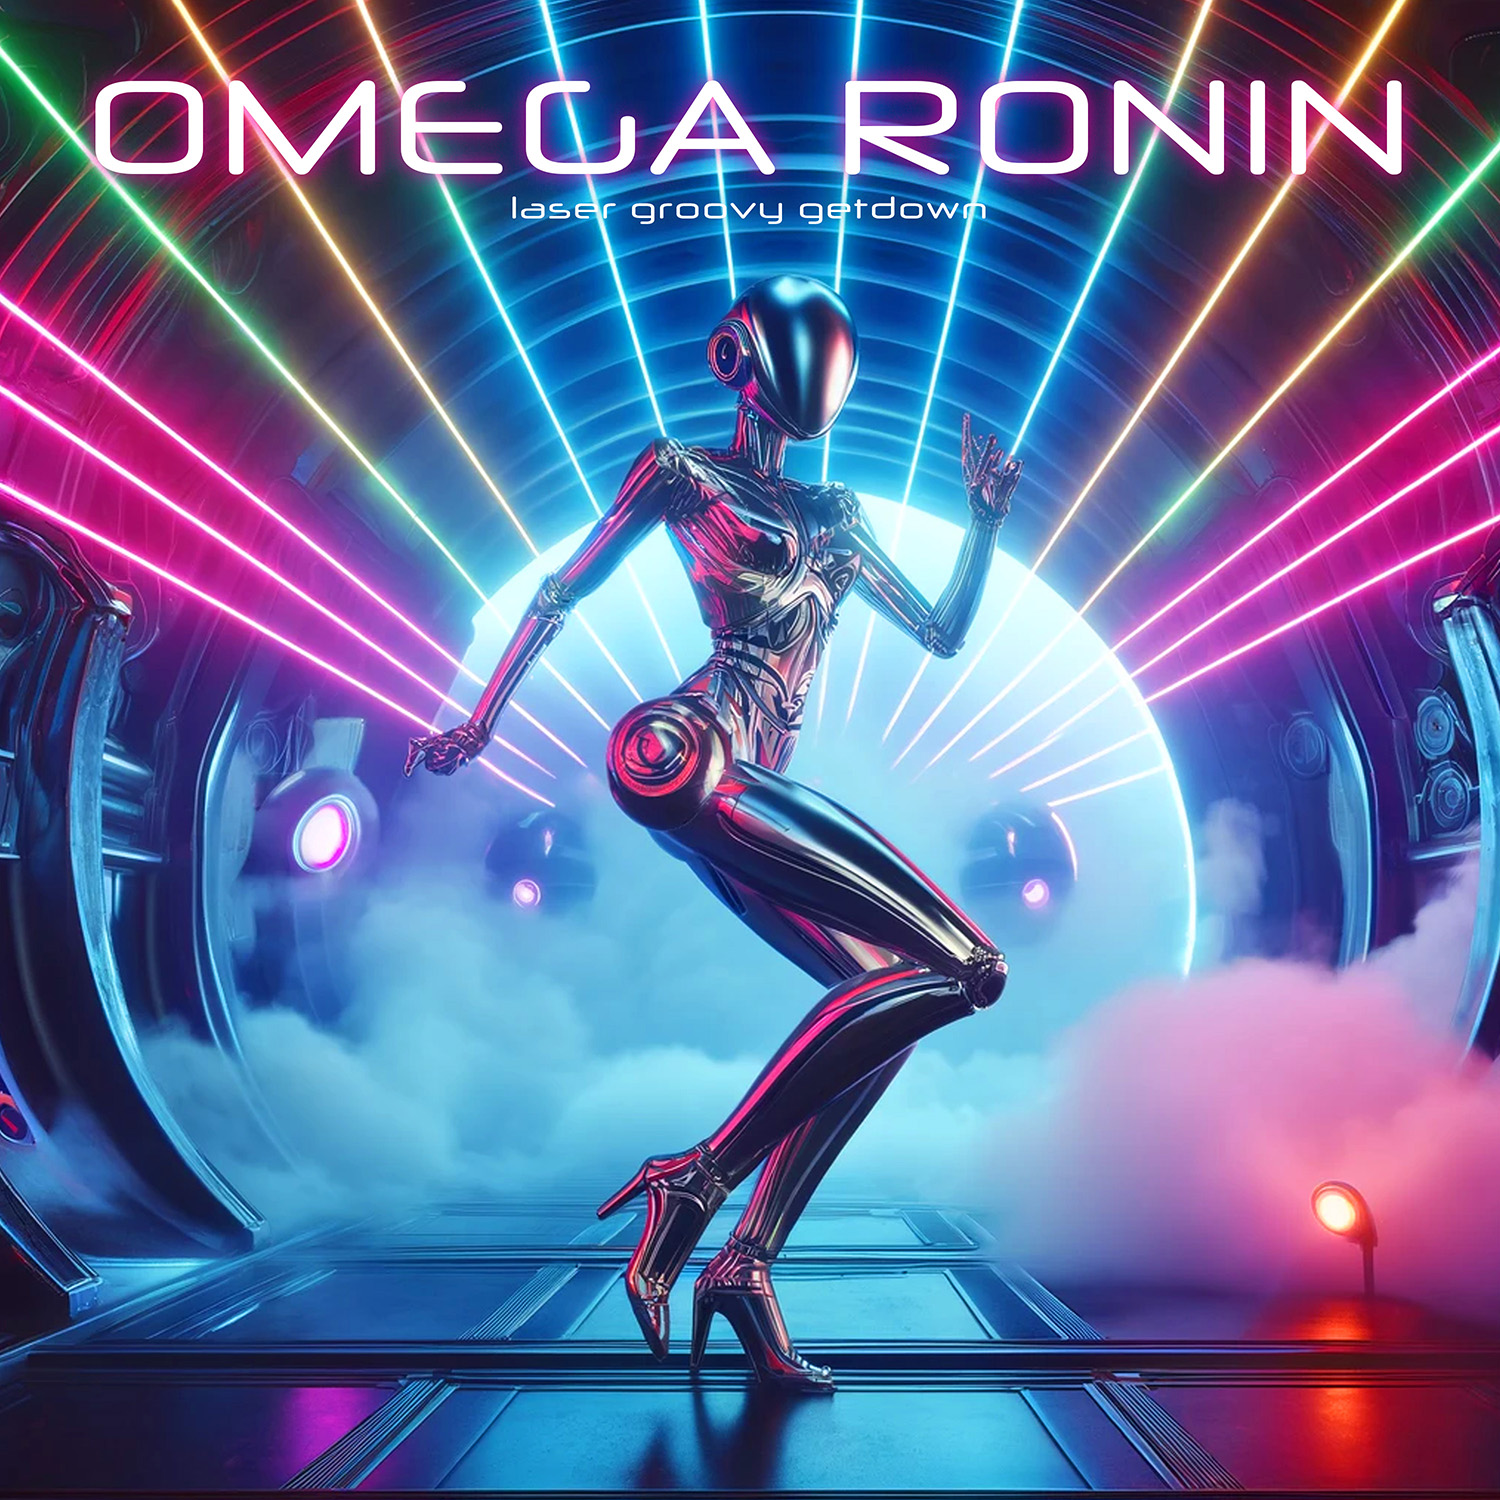 Omega Ronin: Laser Groovy Getdown